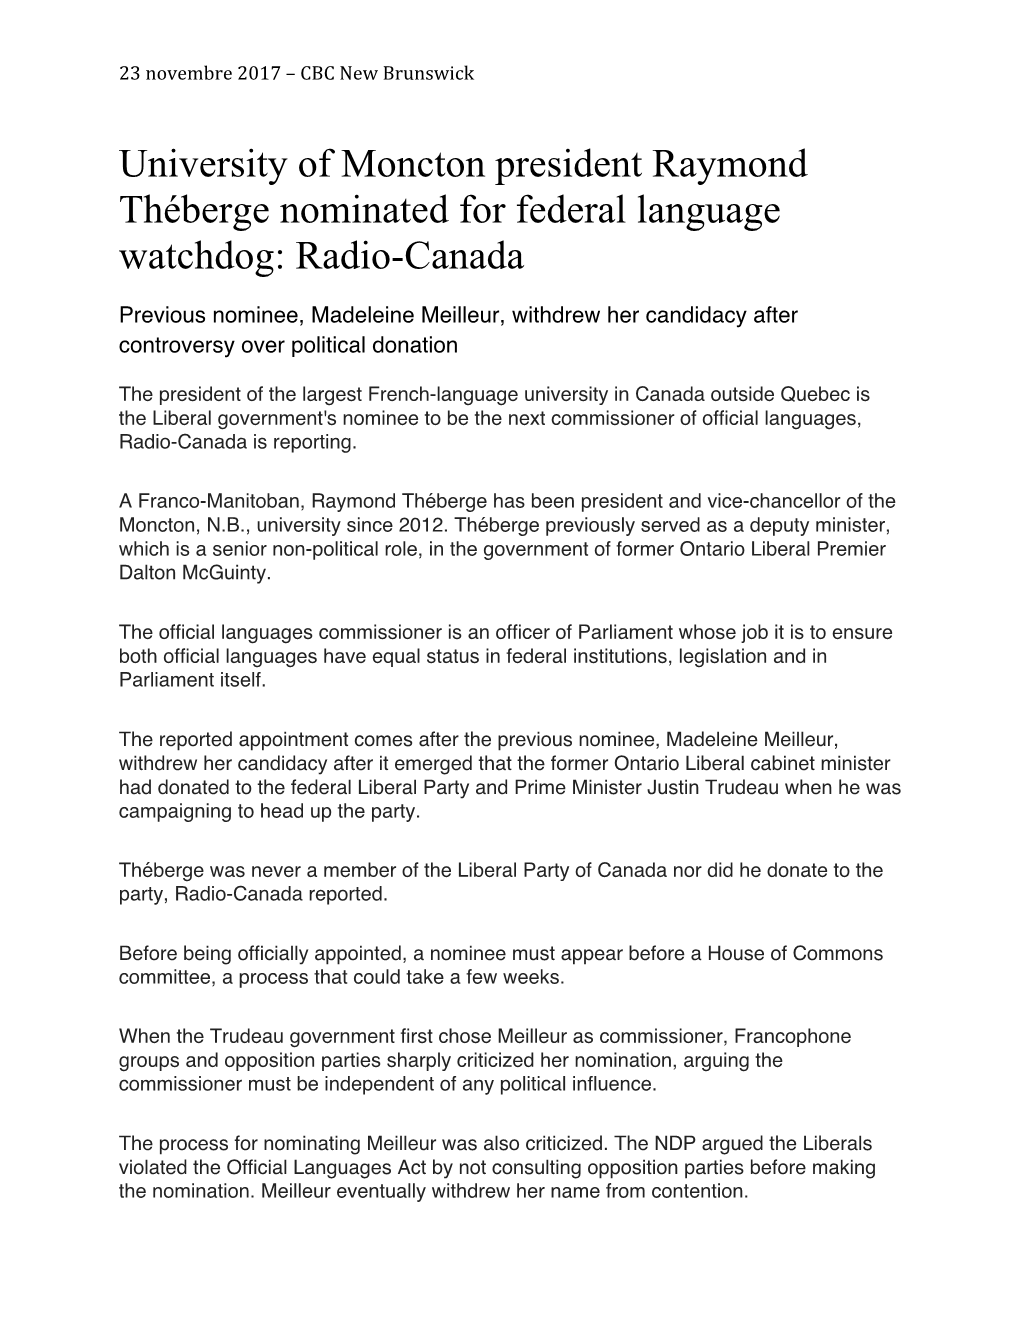 University of Moncton President Raymond Théberge Nominated for Federal Language Watchdog: Radio-Canada